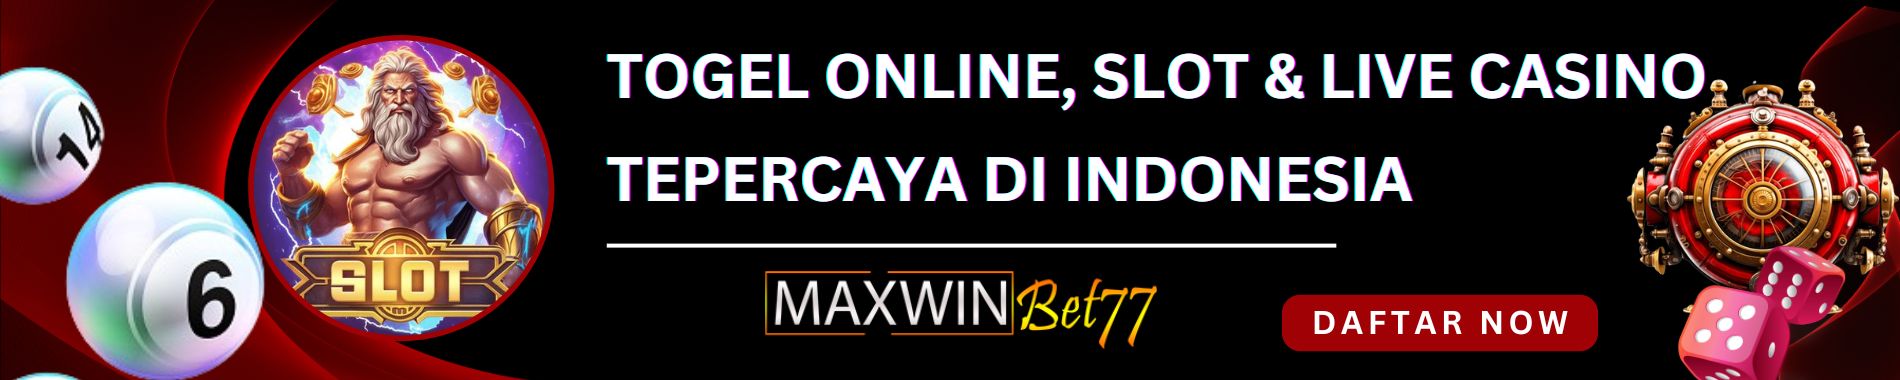 Maxwinbet77 situs togel online dan slot terpercaya